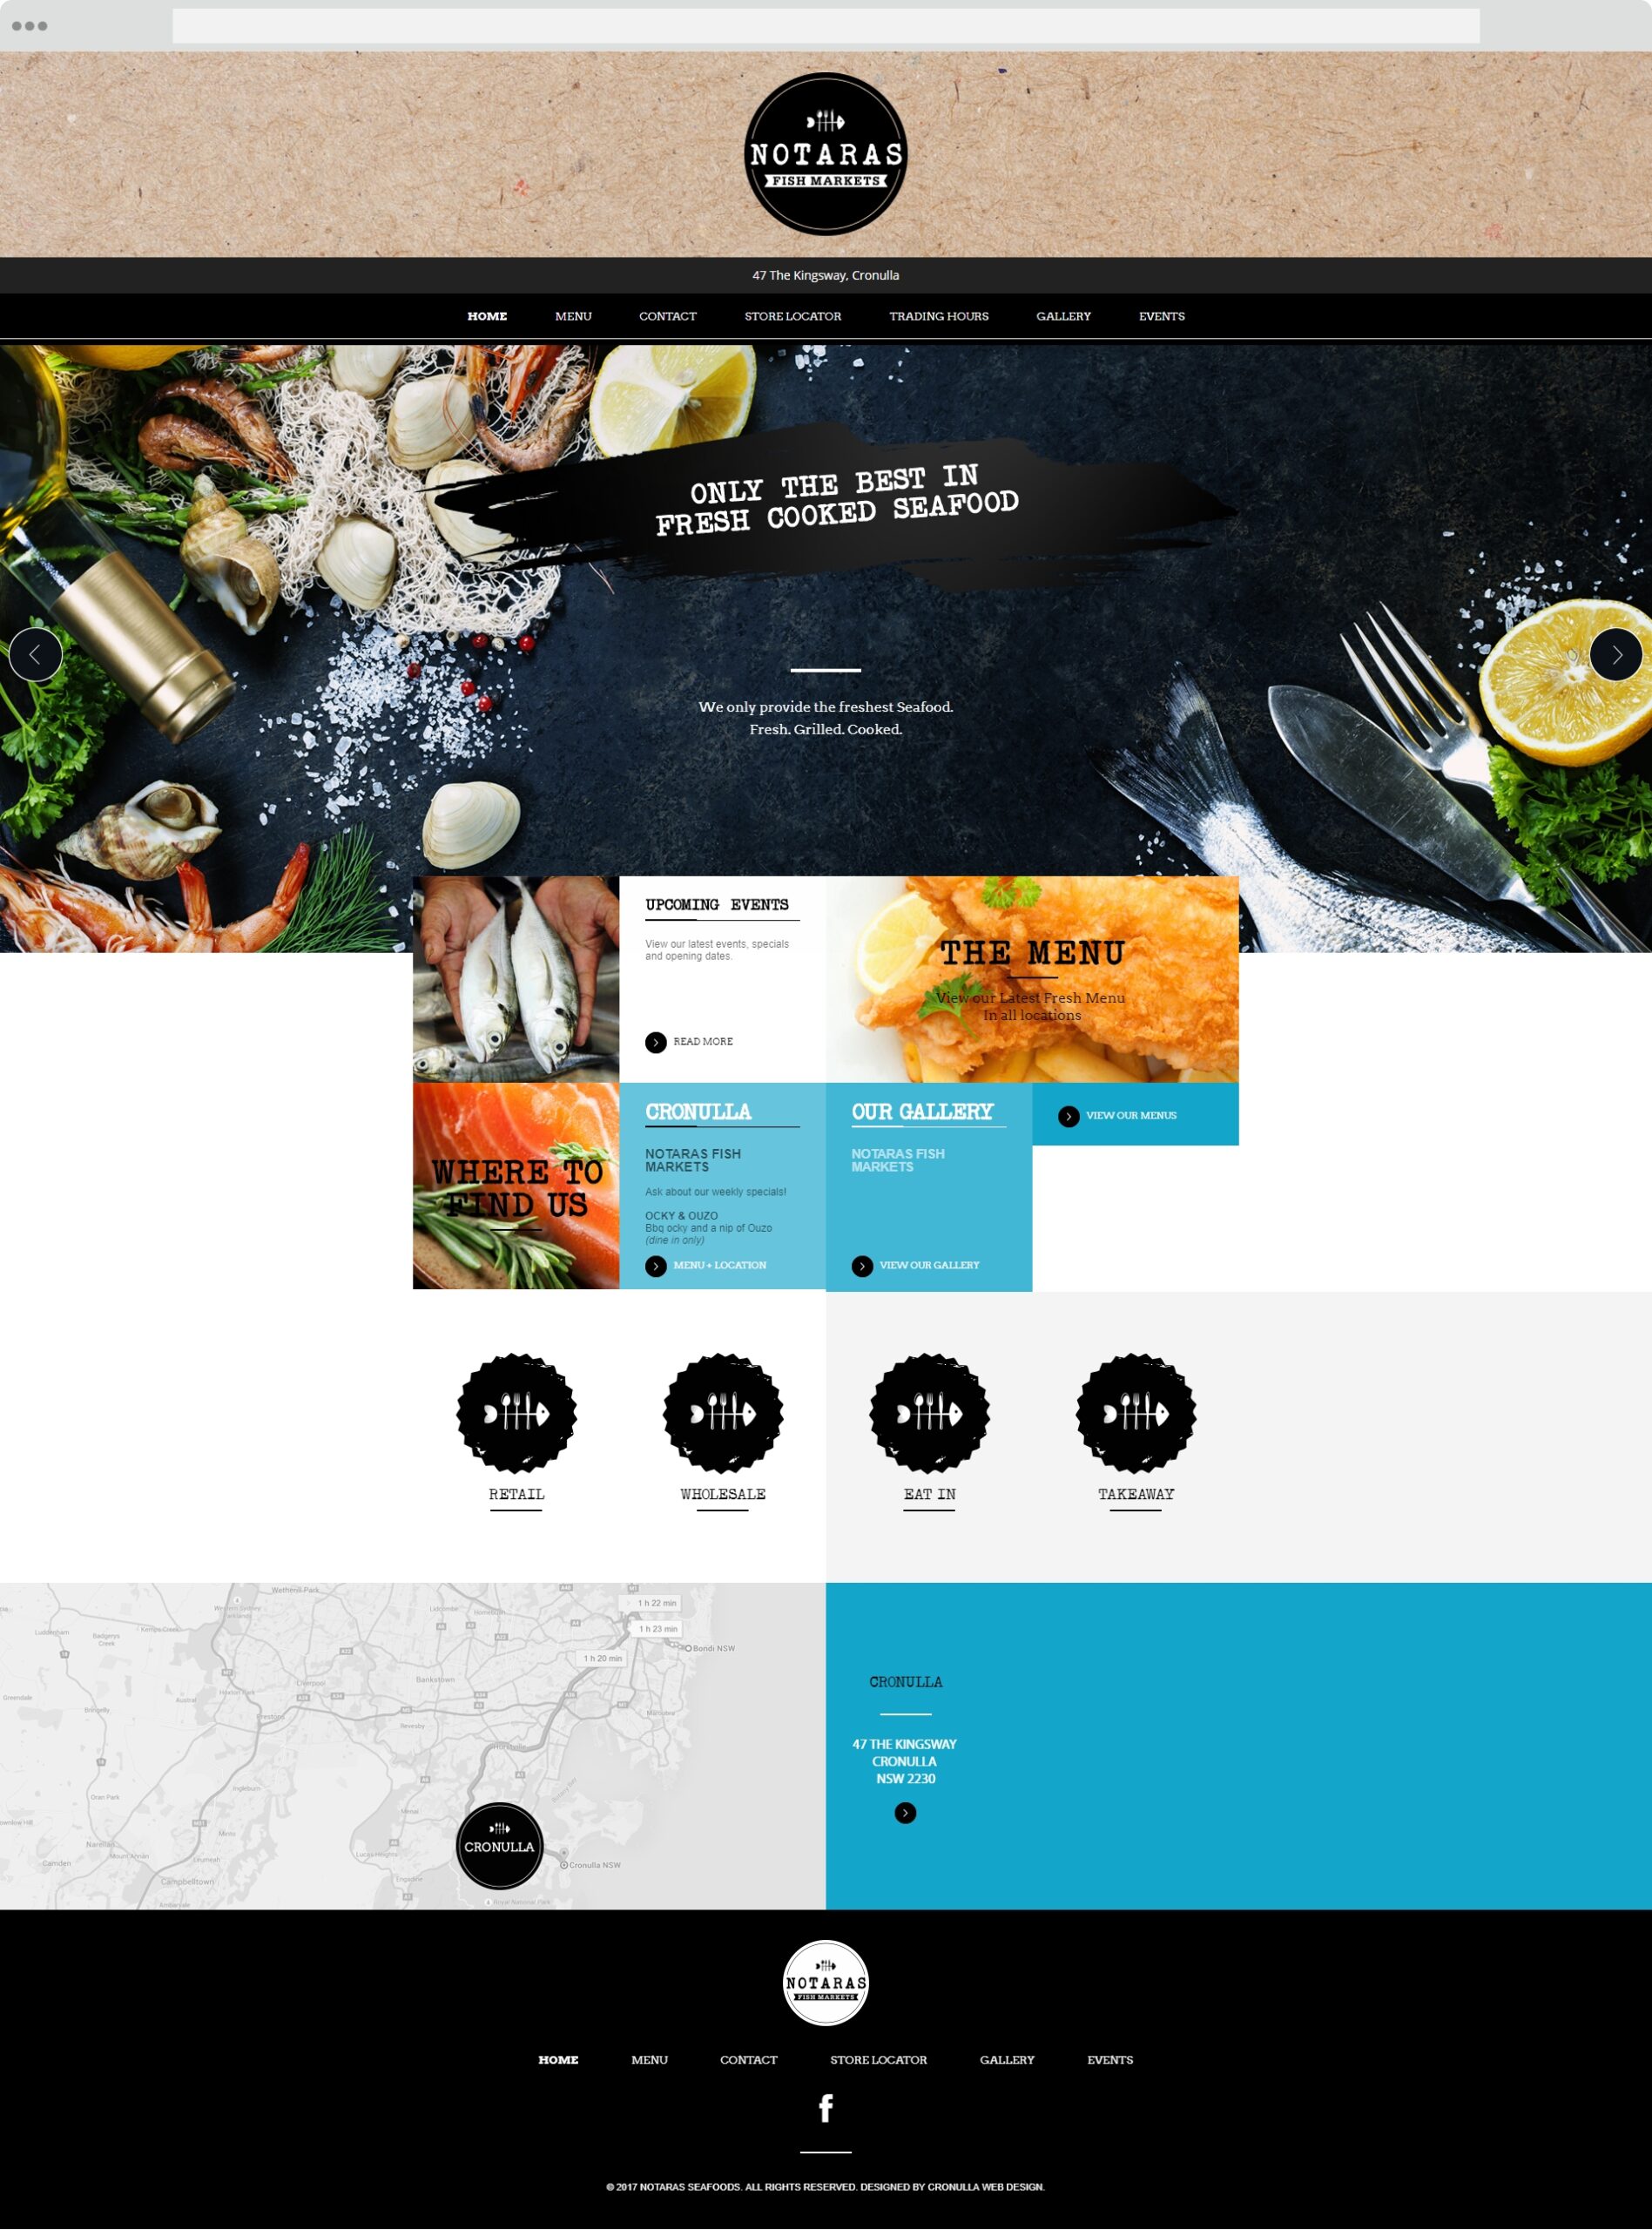 Notaras Homepage Web Design